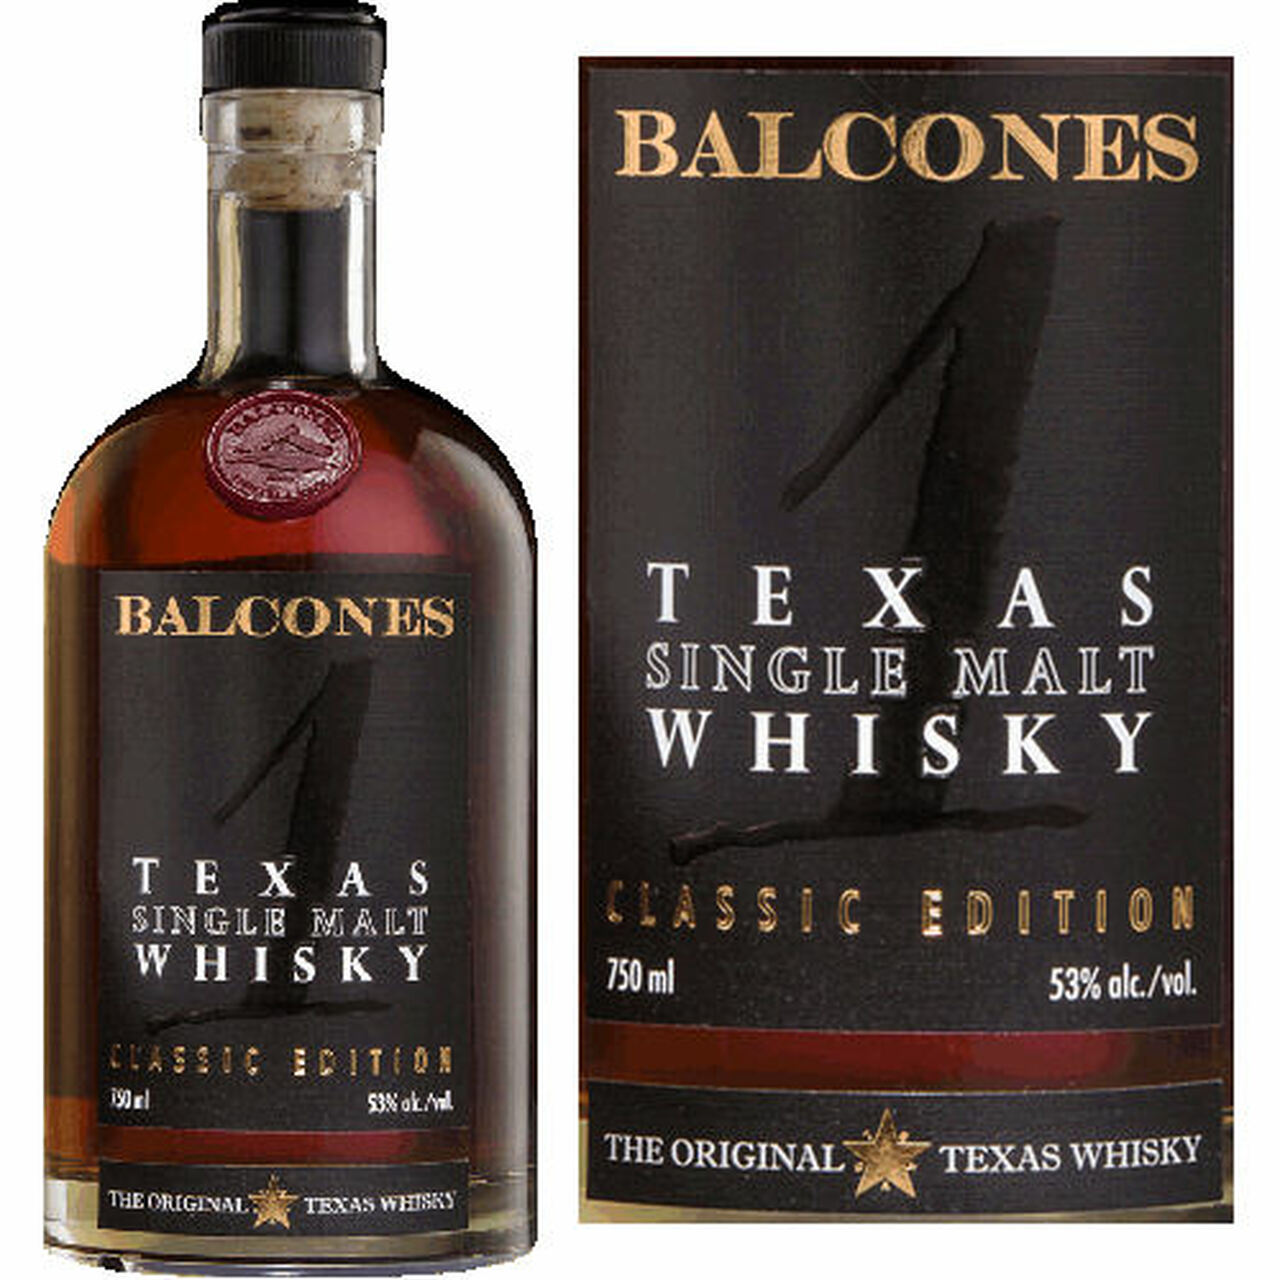 Balcones Texas Single Malt Whisky Classic Edition